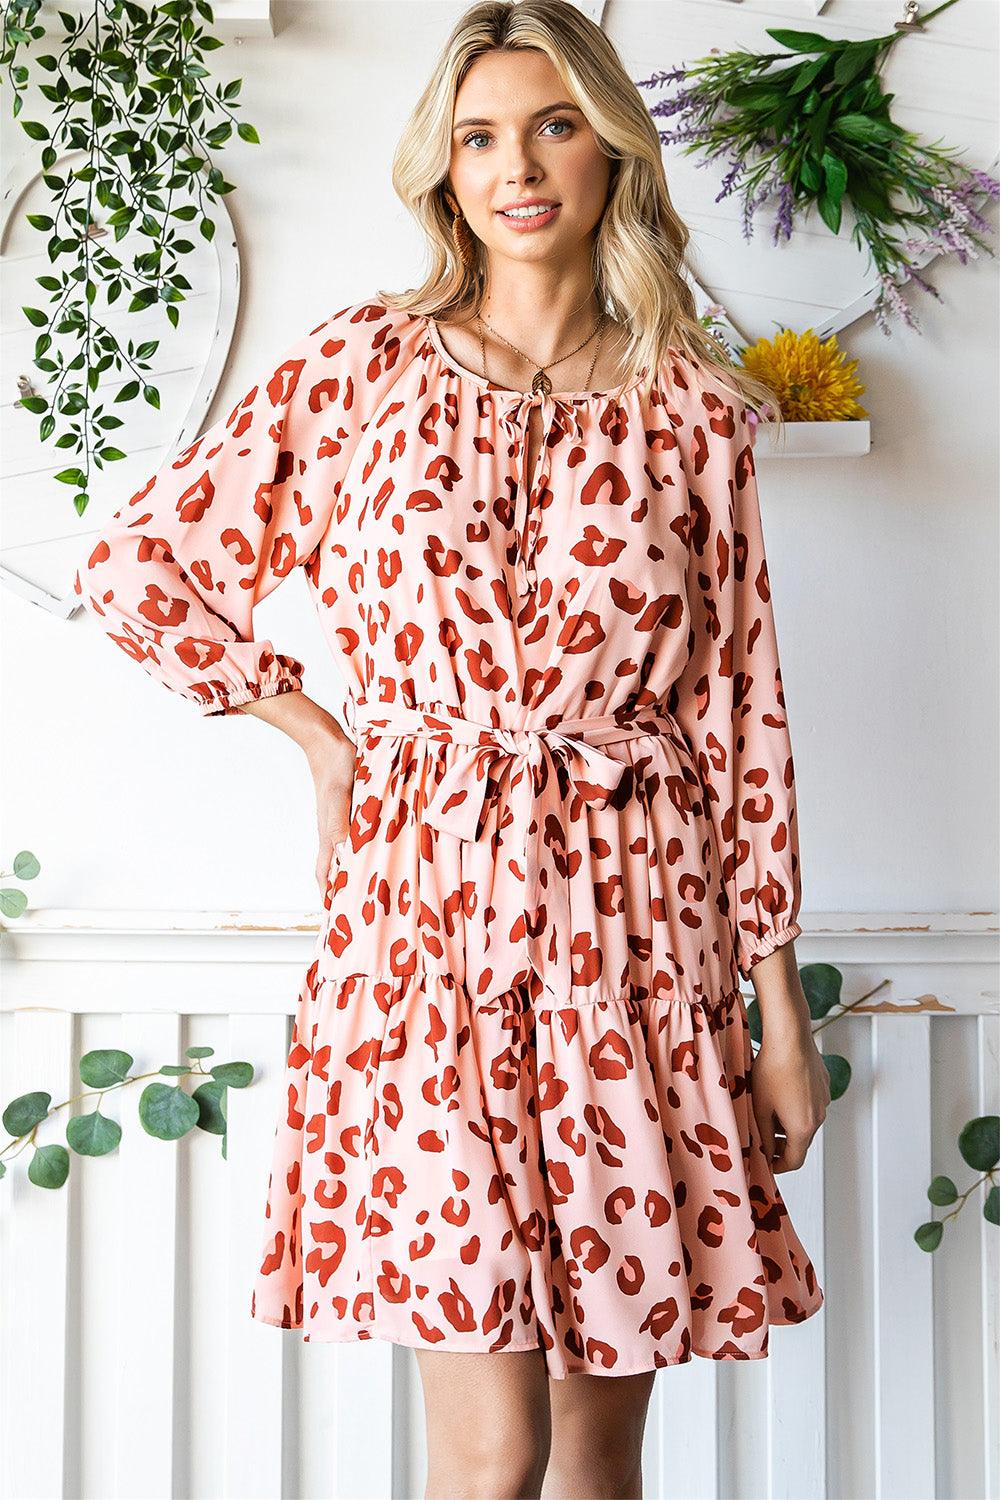 Verona Leopard Print Dress - Vesteeto